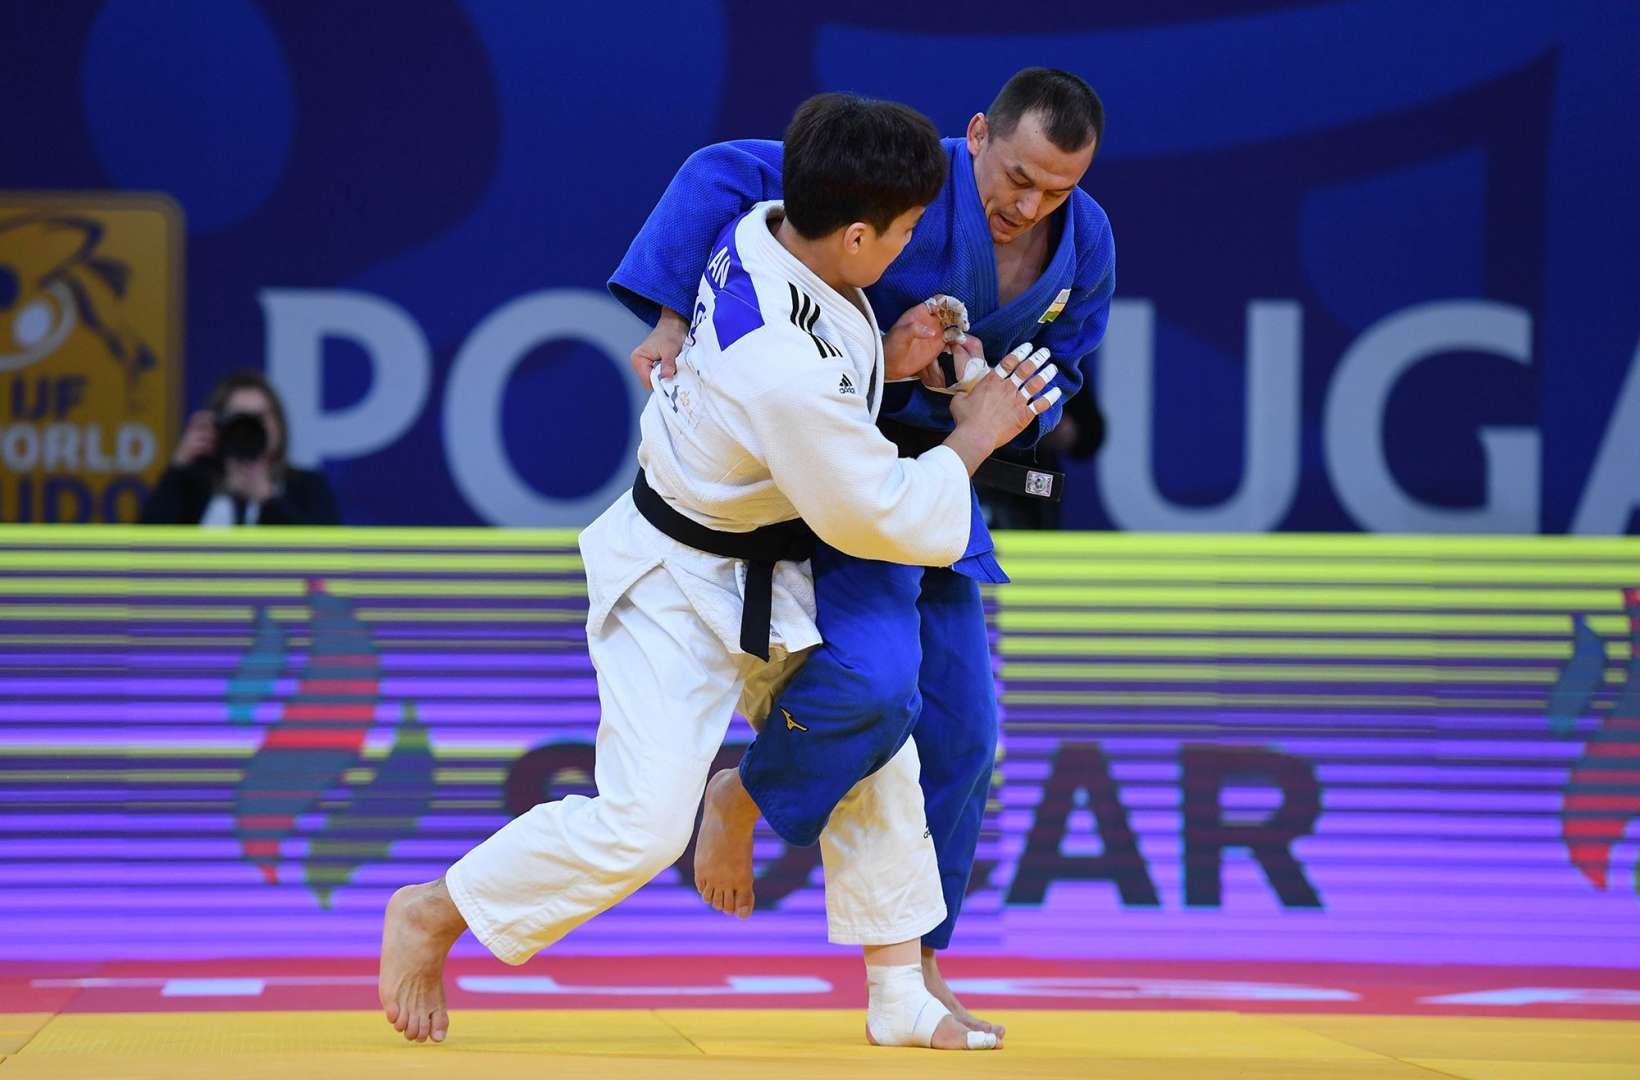 Tapis de judo FIJ fed performance 200kg/m³ 2x1m - Sportibel SA